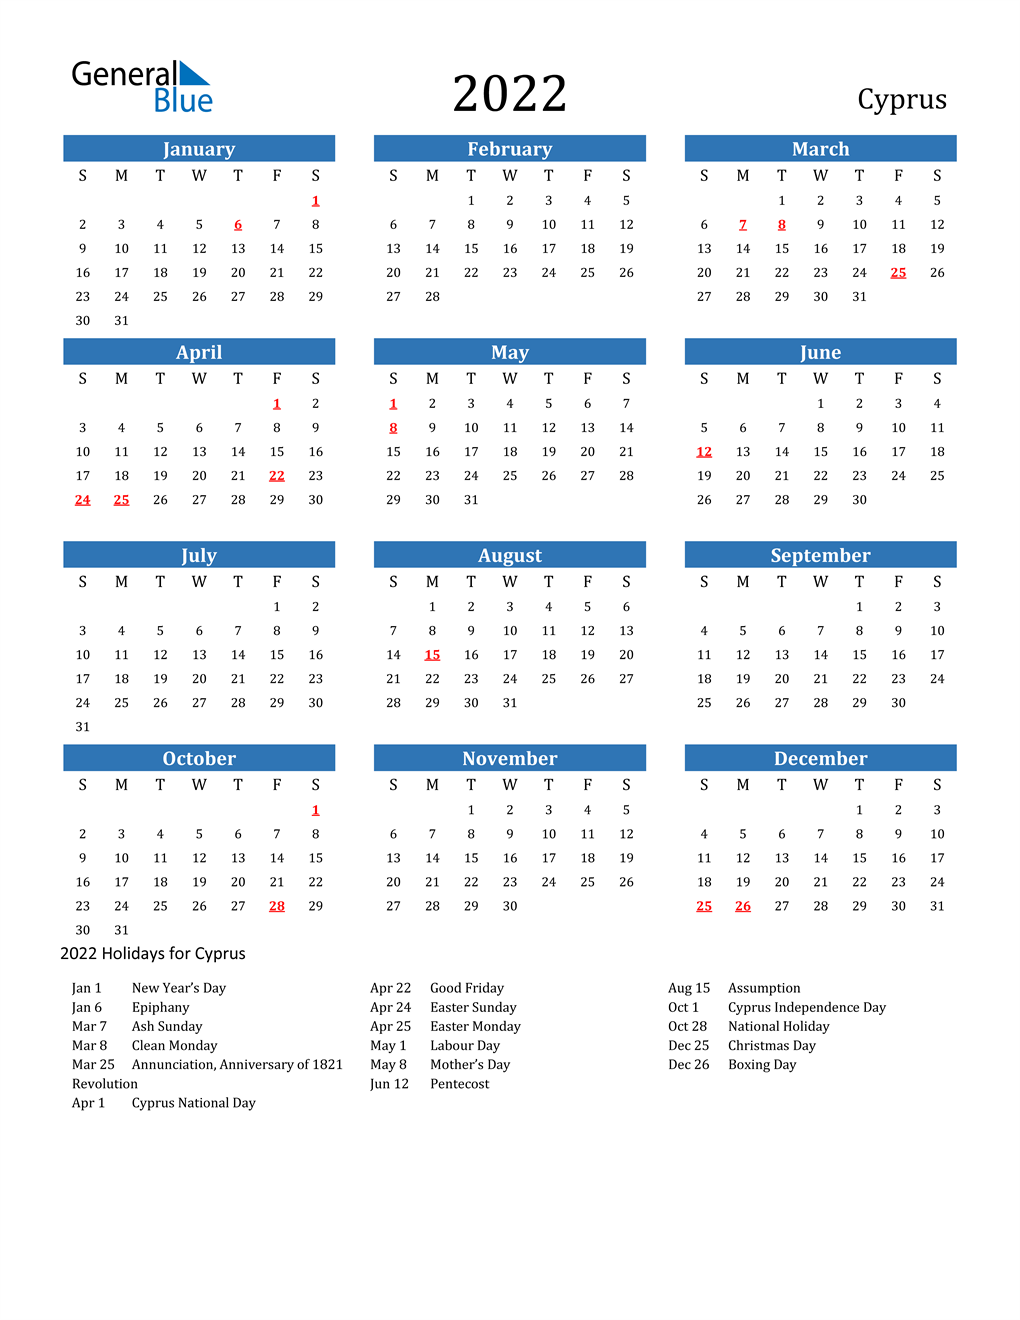 2022 Cyprus Calendar with Holidays